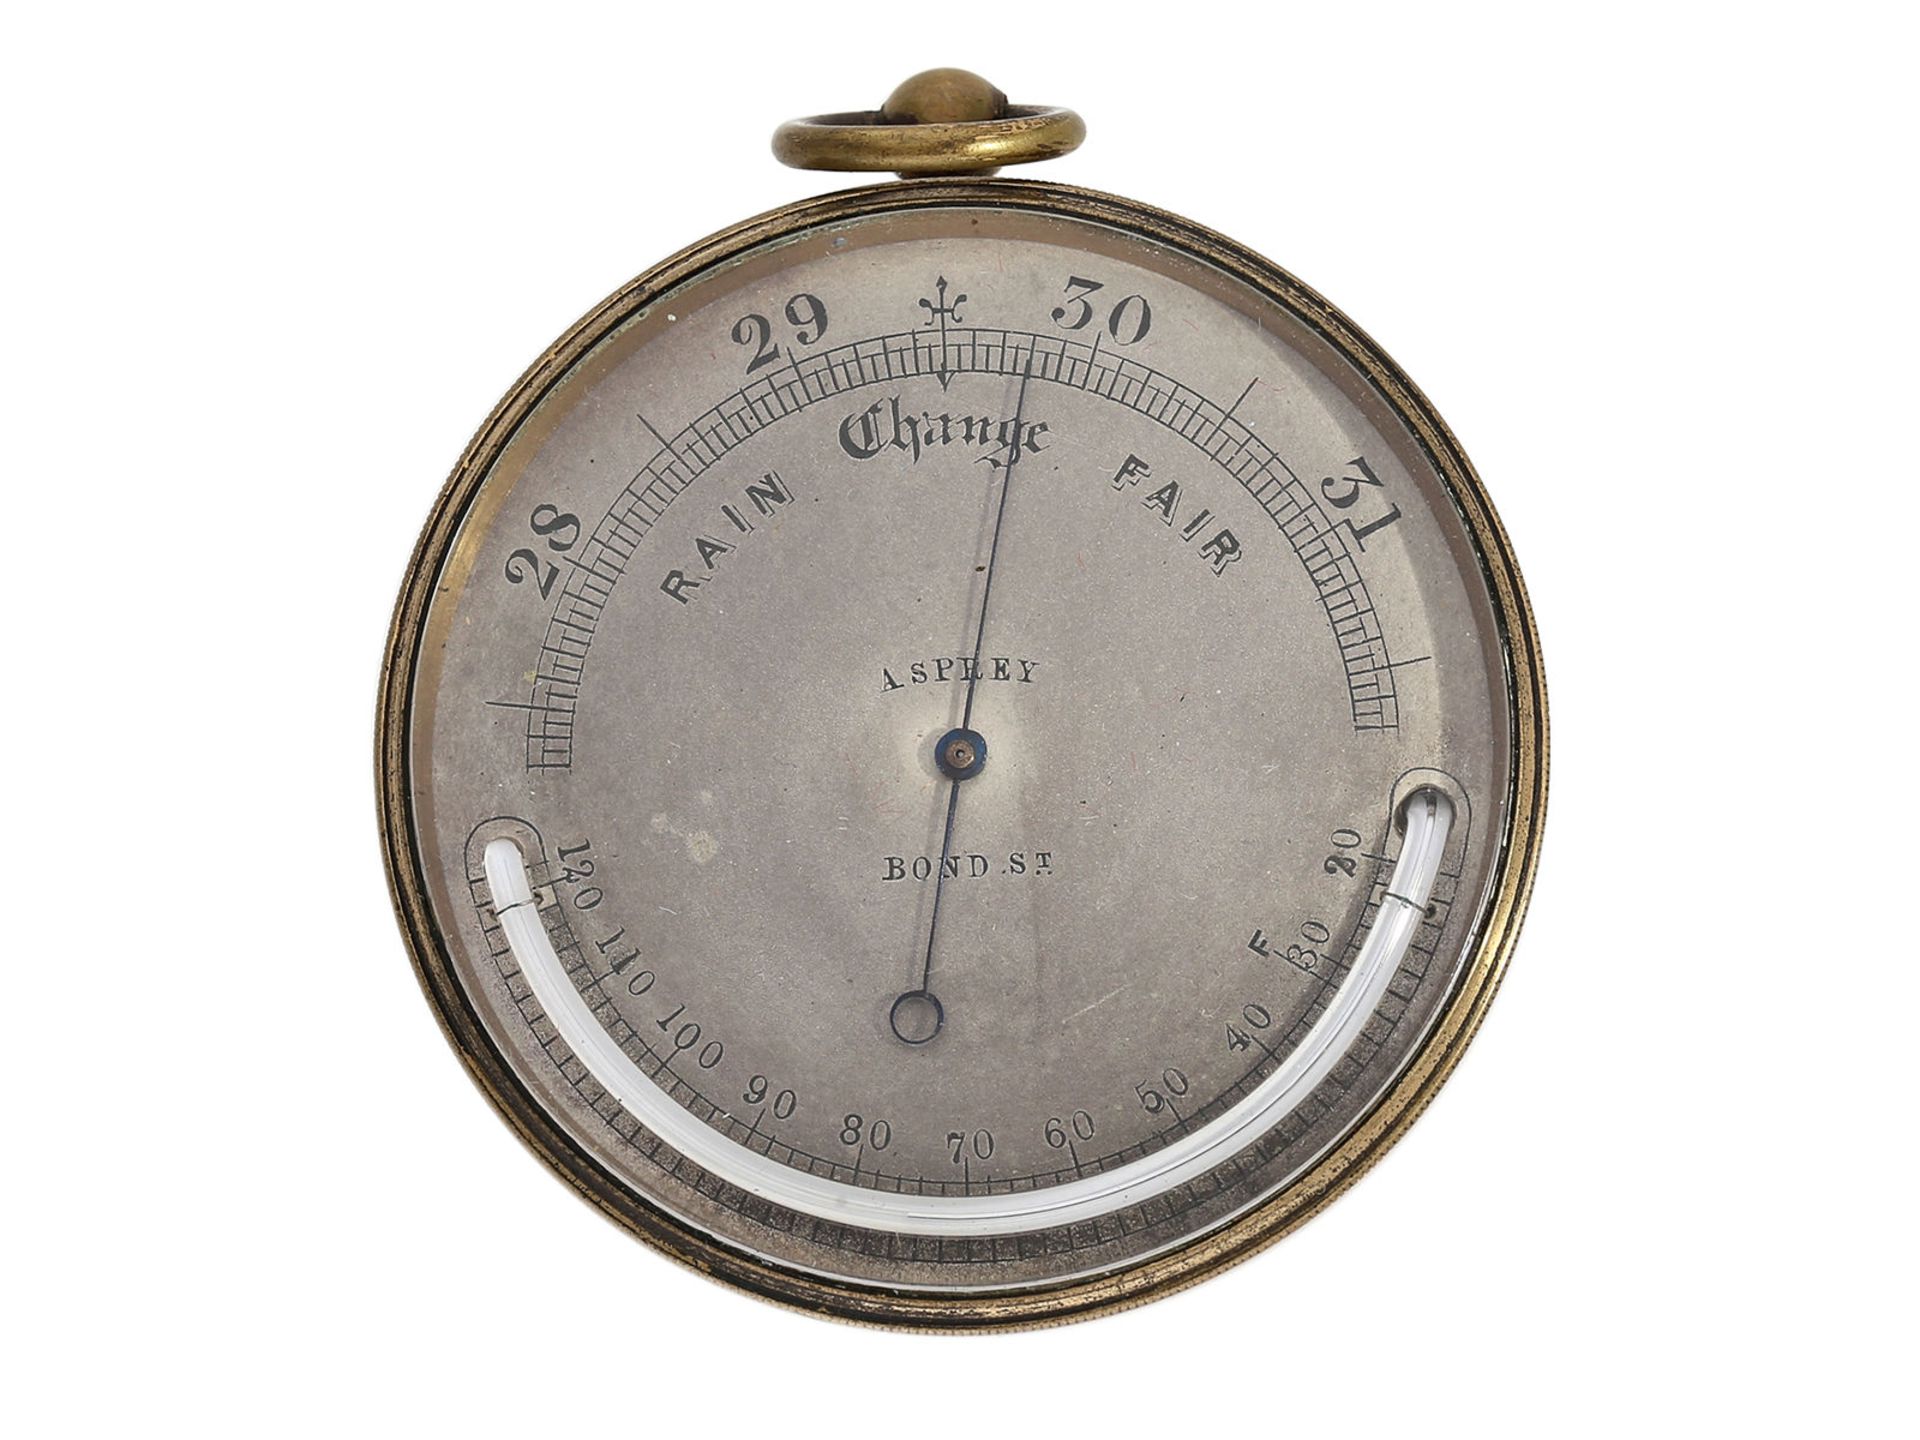 Taschenbarometer/Thermometer/Kompass: Konvolut aus einem Taschenbarometer und einem Taschenkompass,  - Bild 7 aus 9